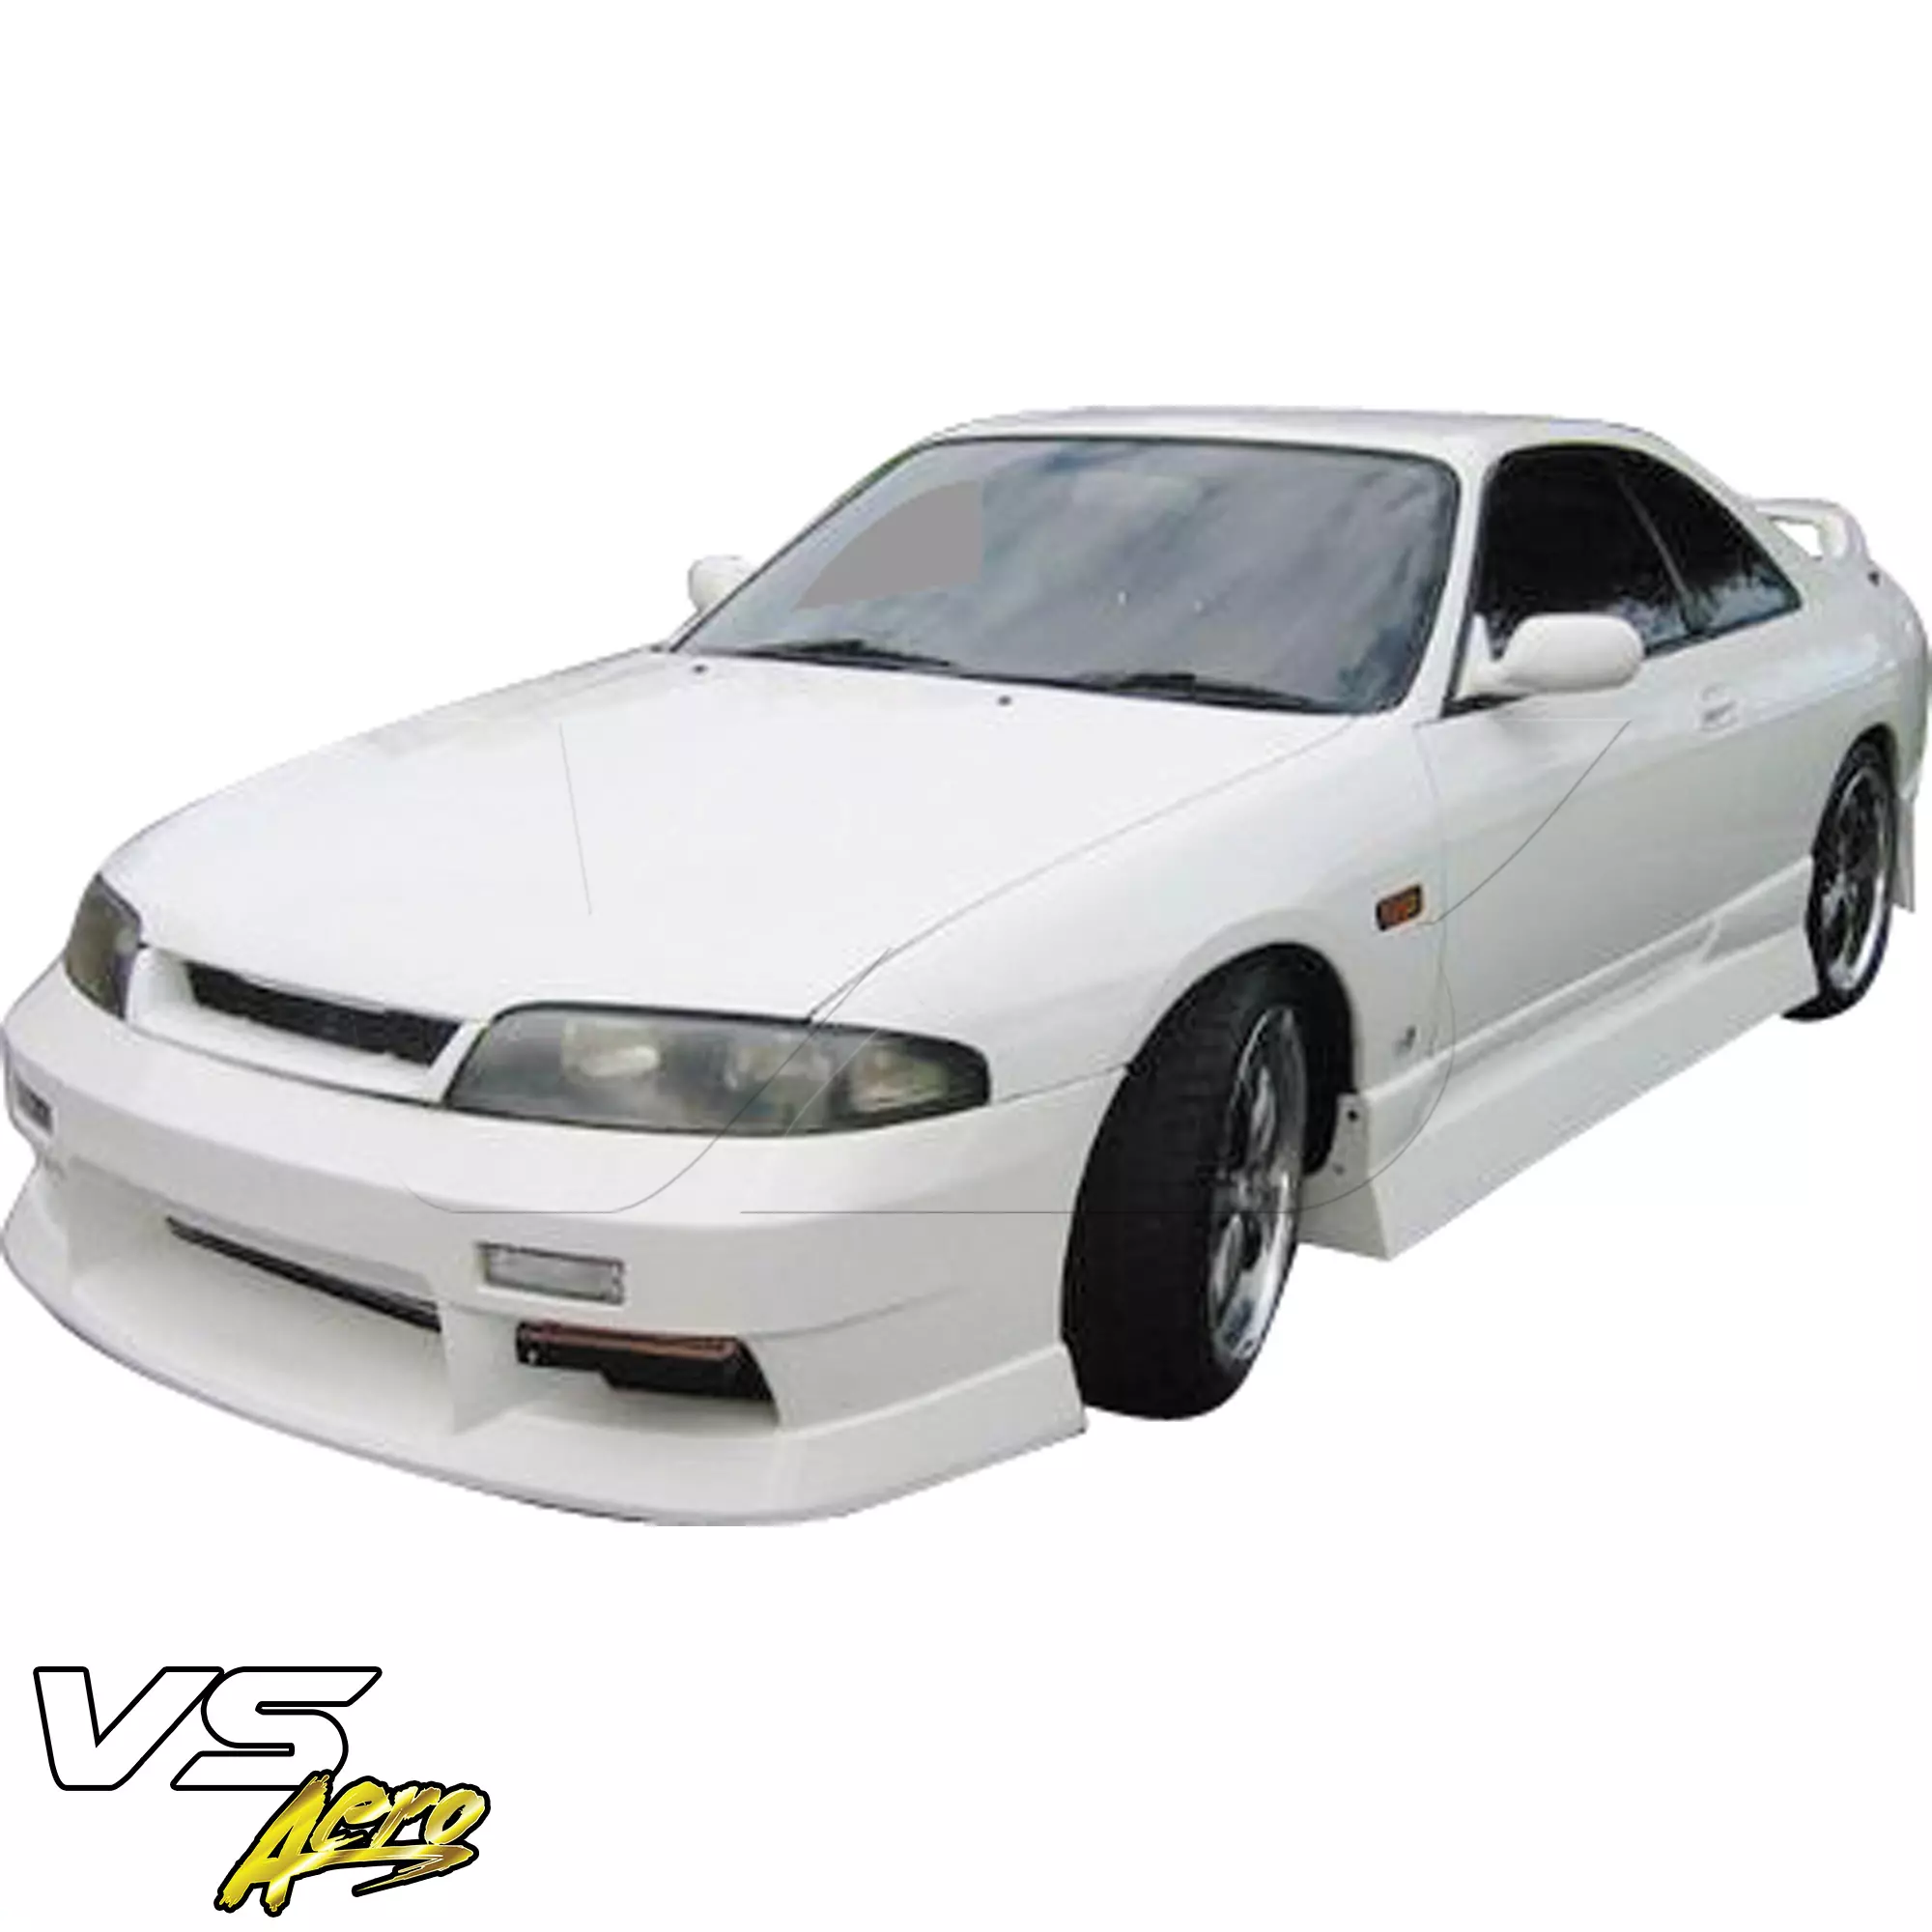 VSaero FRP MSPO Body Kit 4pc > Nissan Skyline R33 GTS 1995-1998 > 4dr Sedan - Image 2